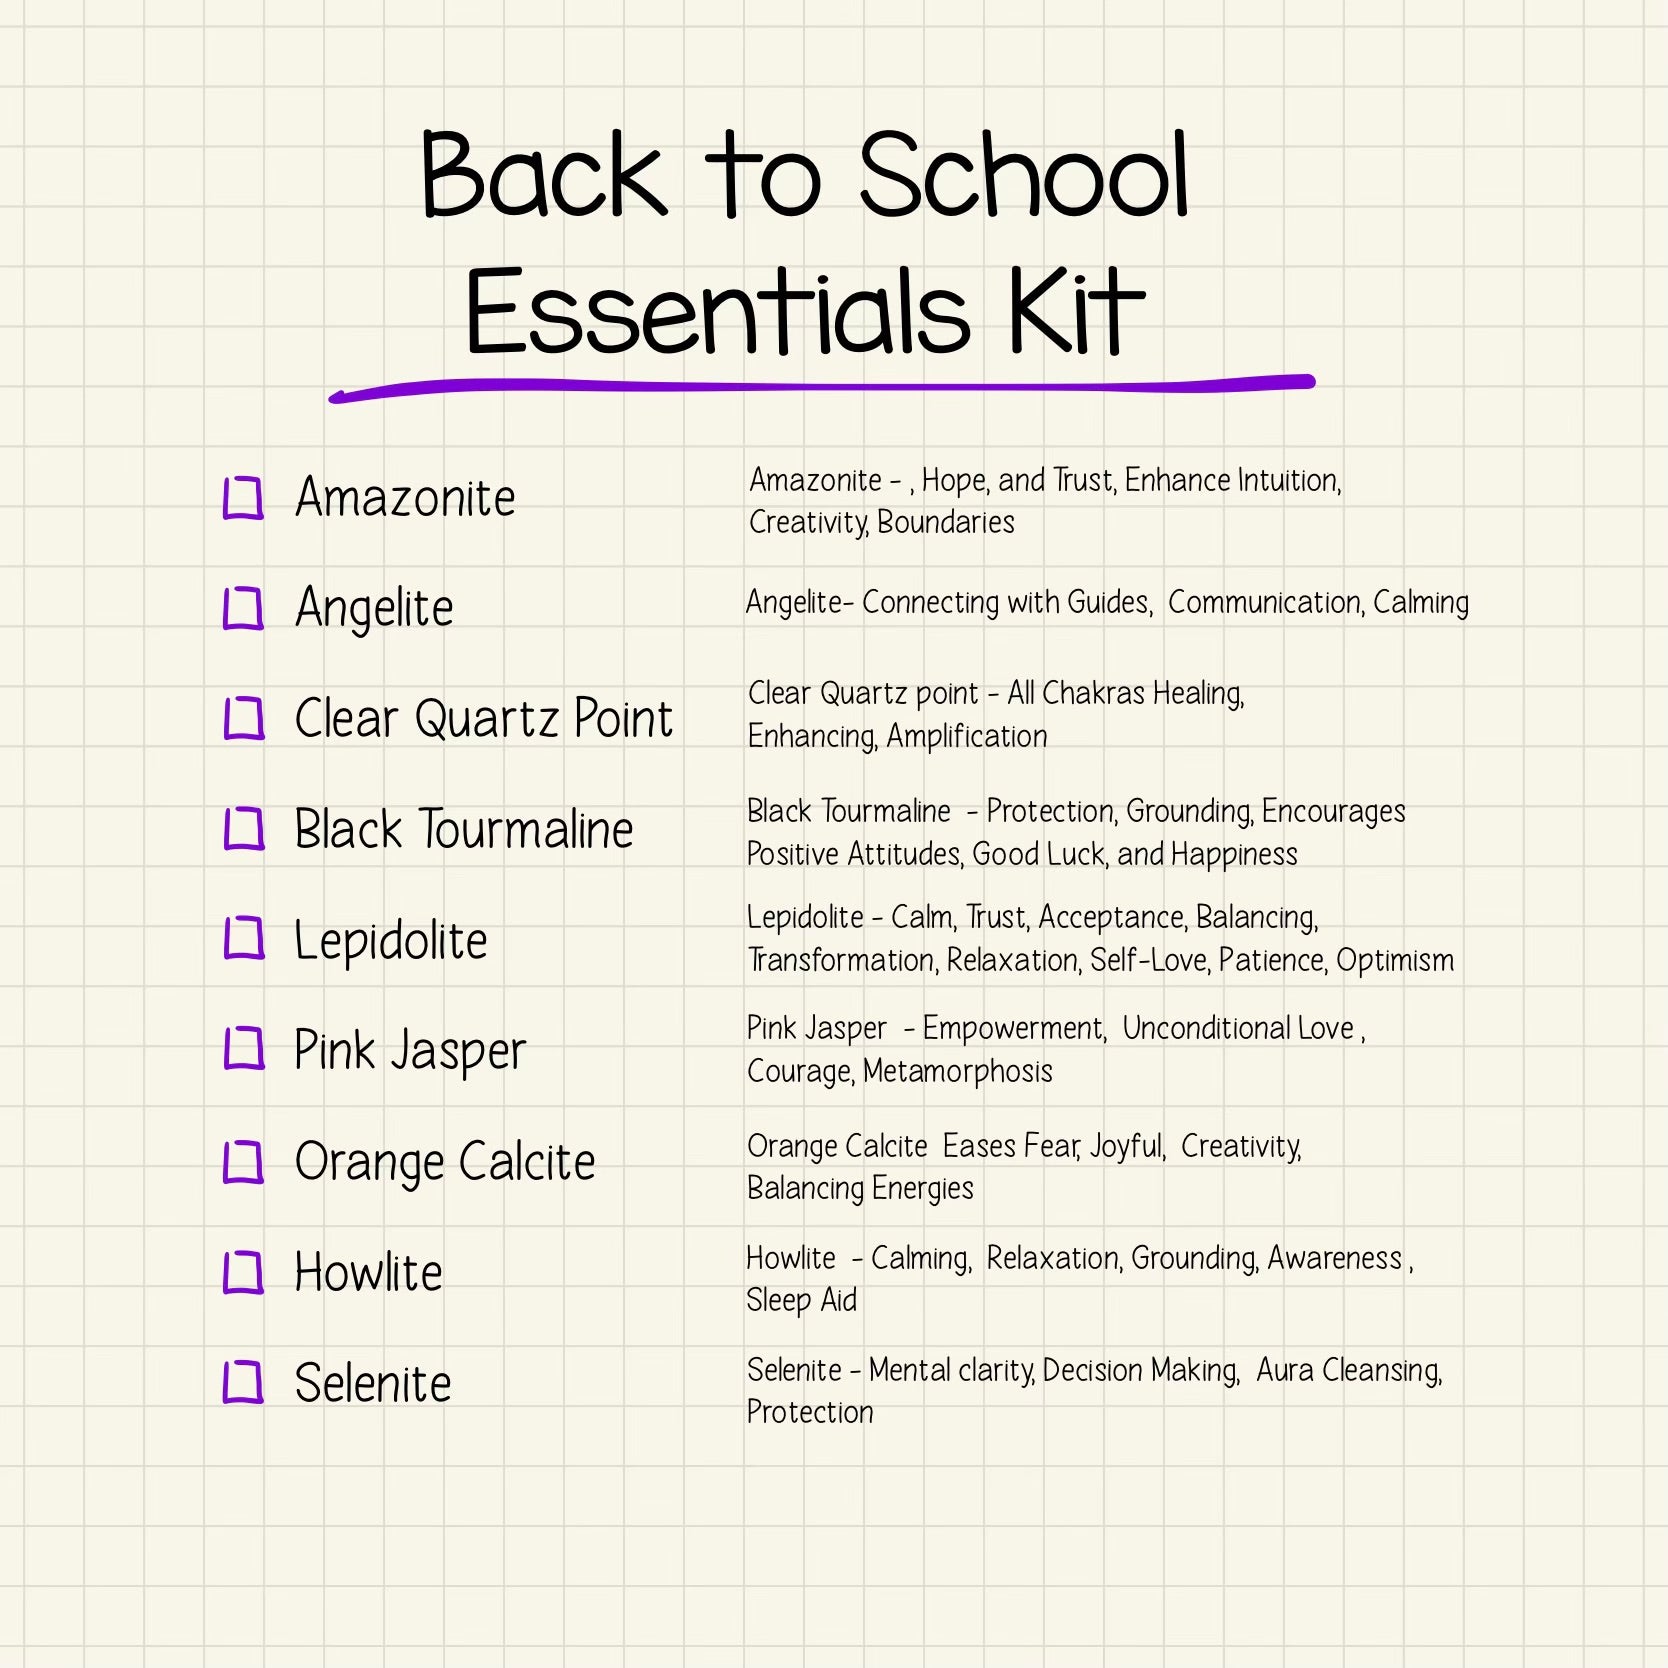 Back to School Essentials Kit